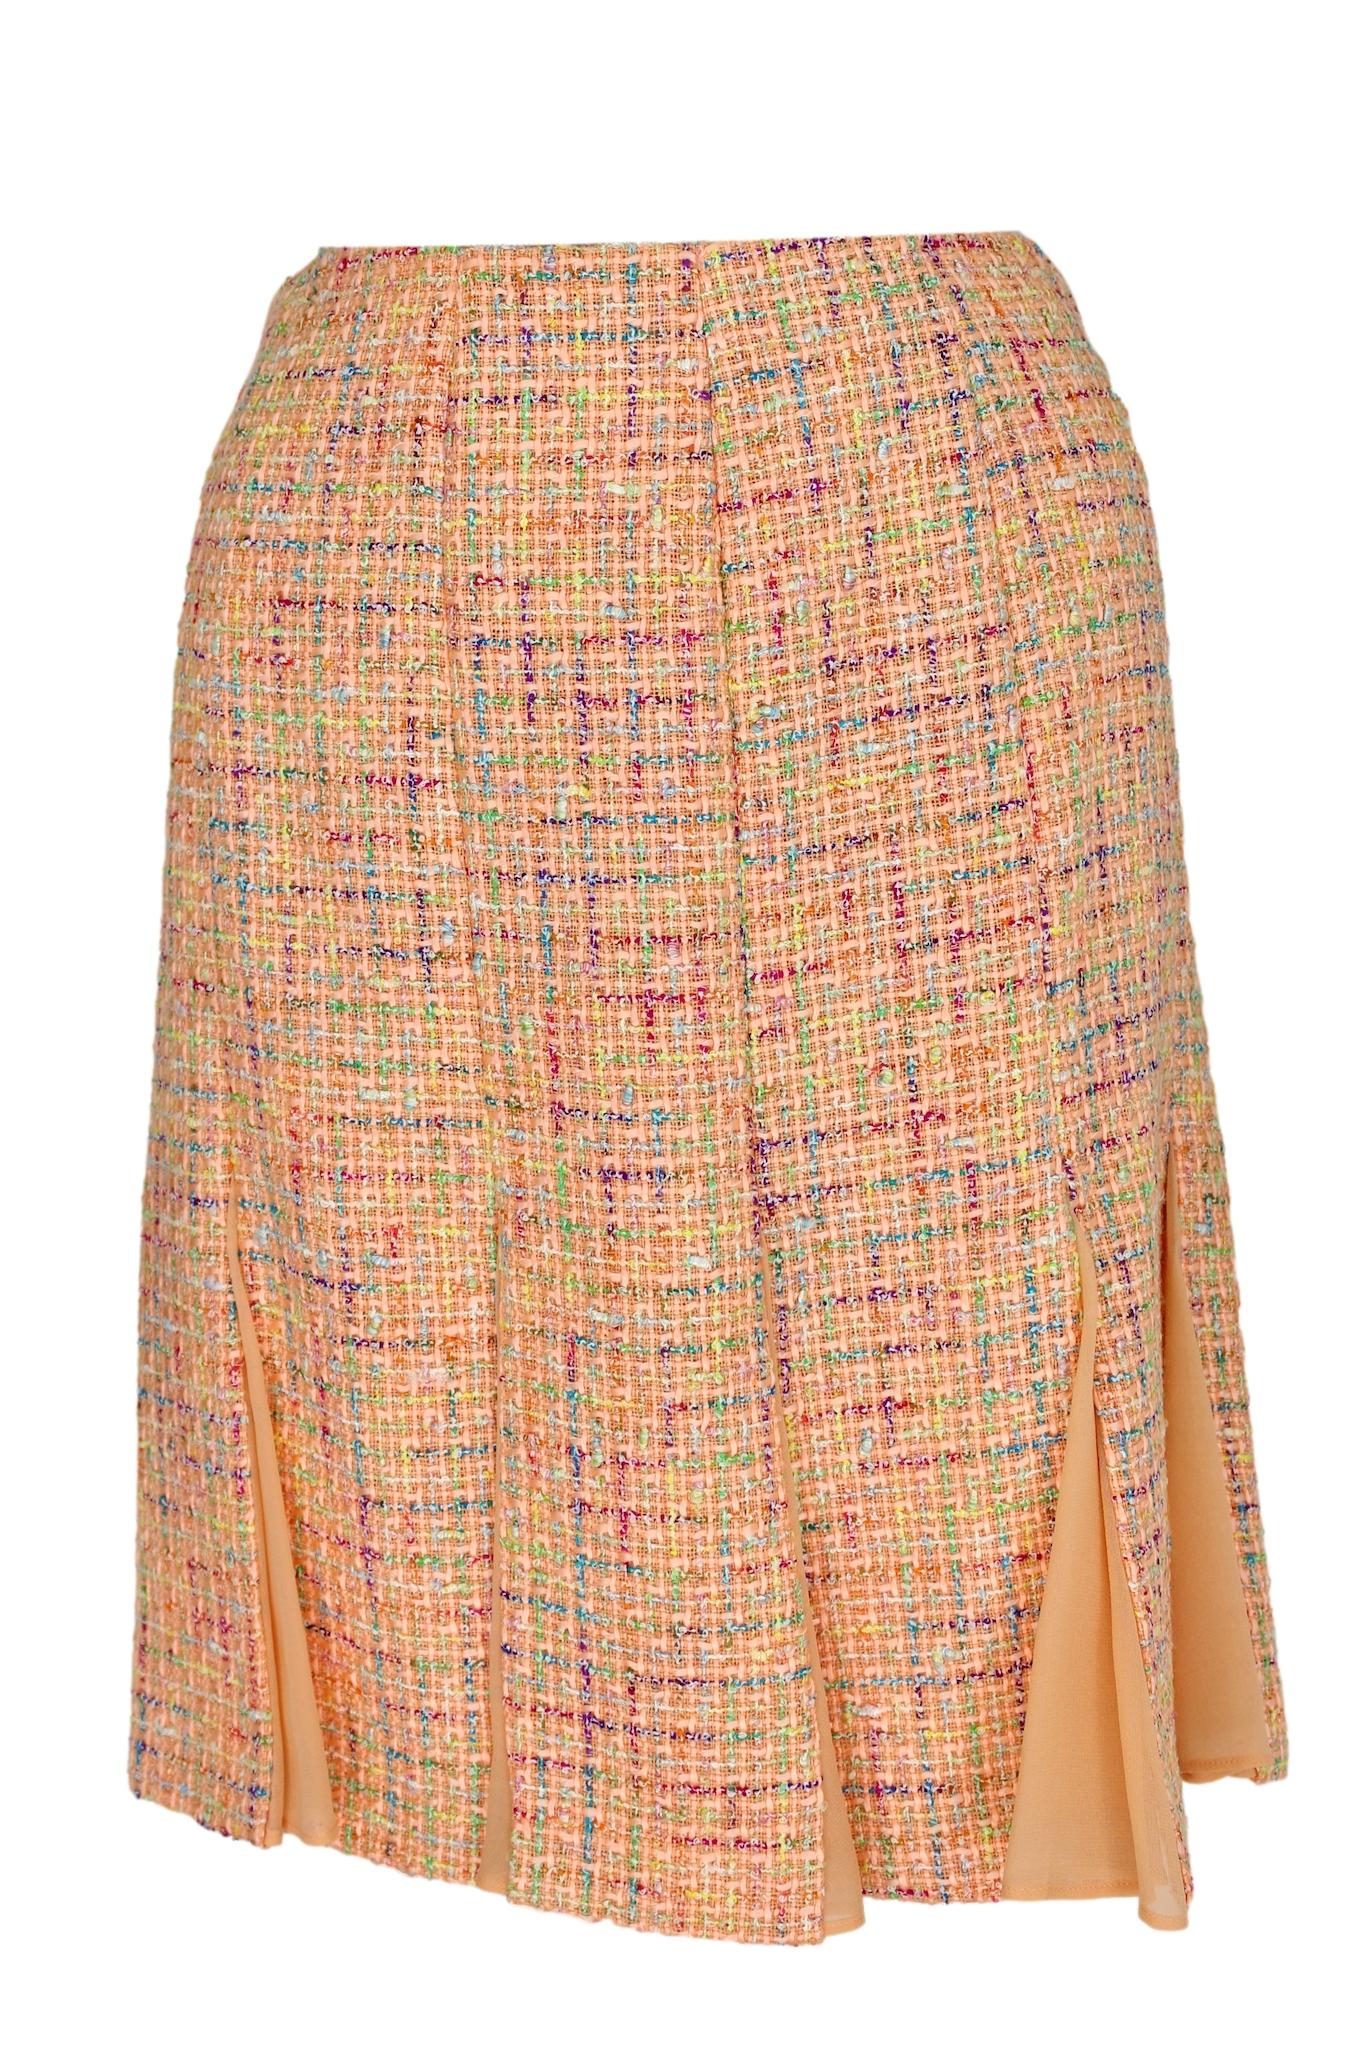 Luisa Spagnoli Pink Boucle Cocktail Skirt Suit 3